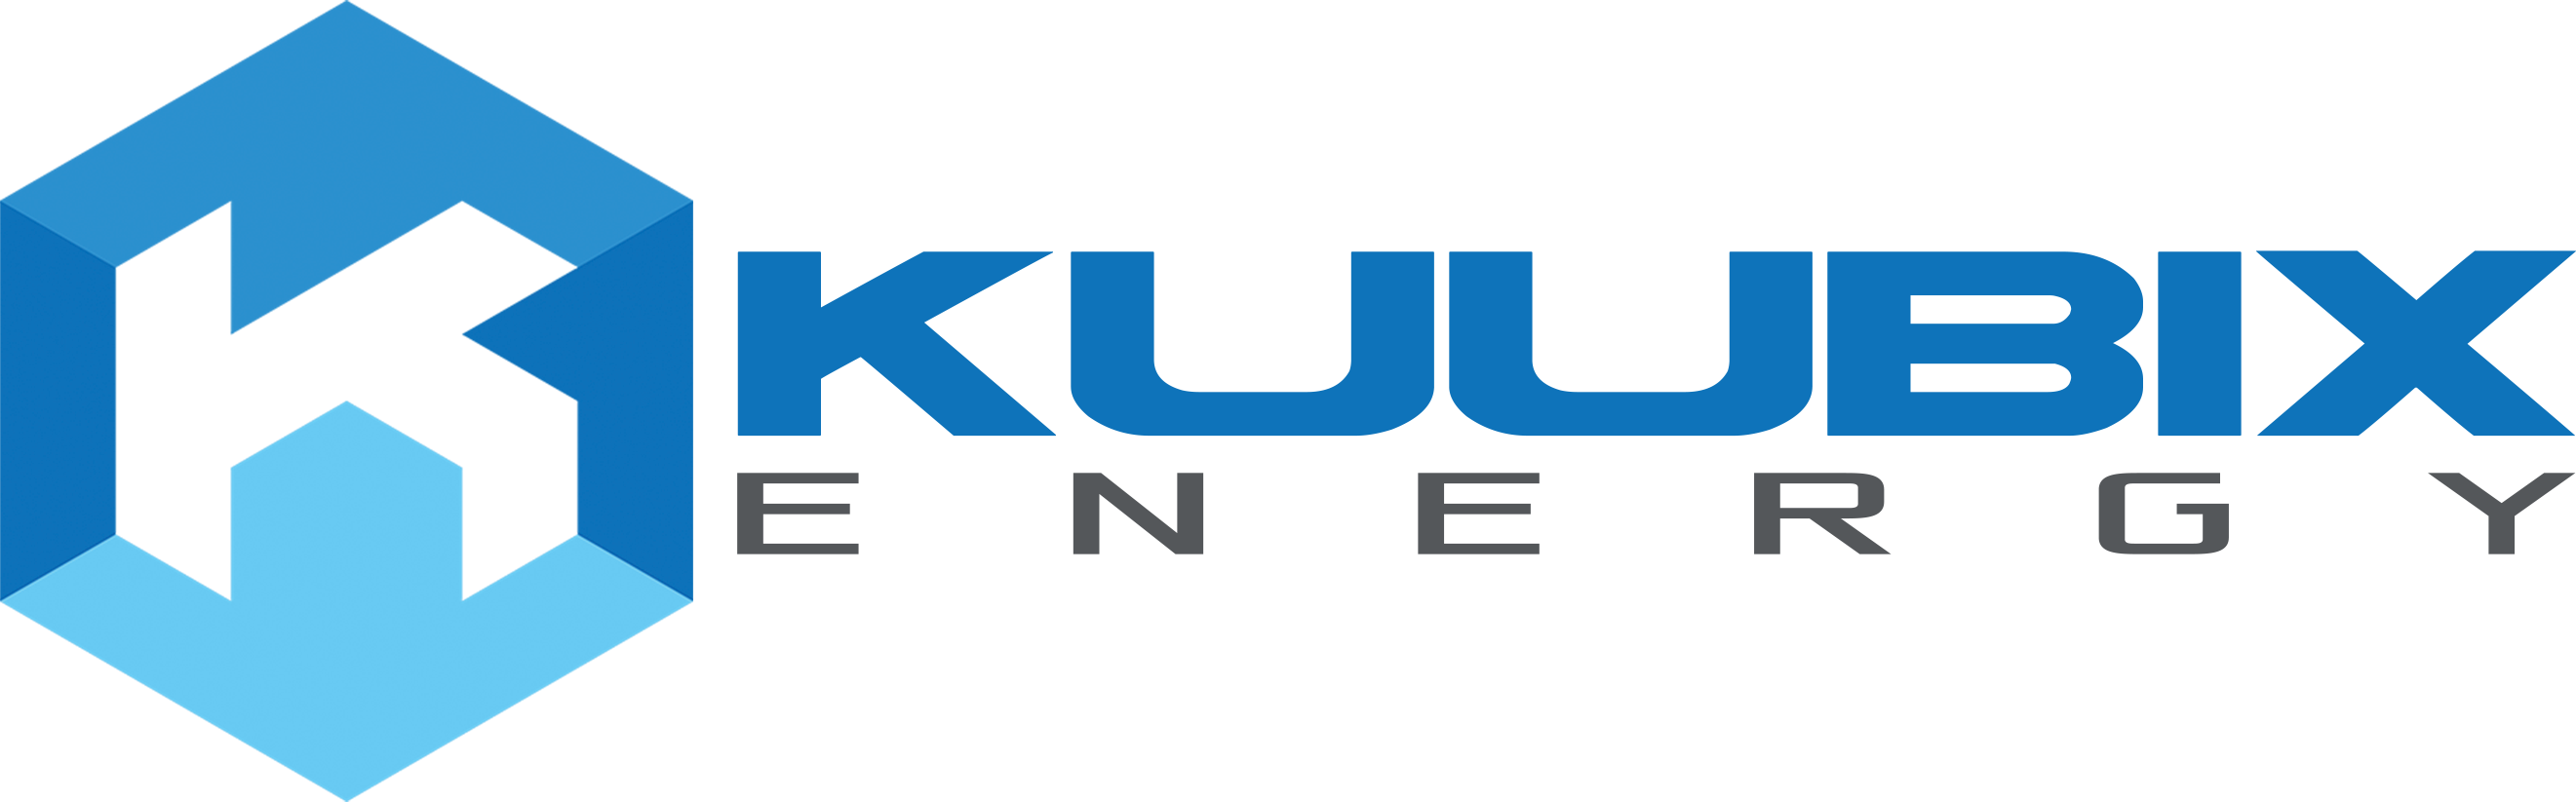 Kuubix - Out of Business logo